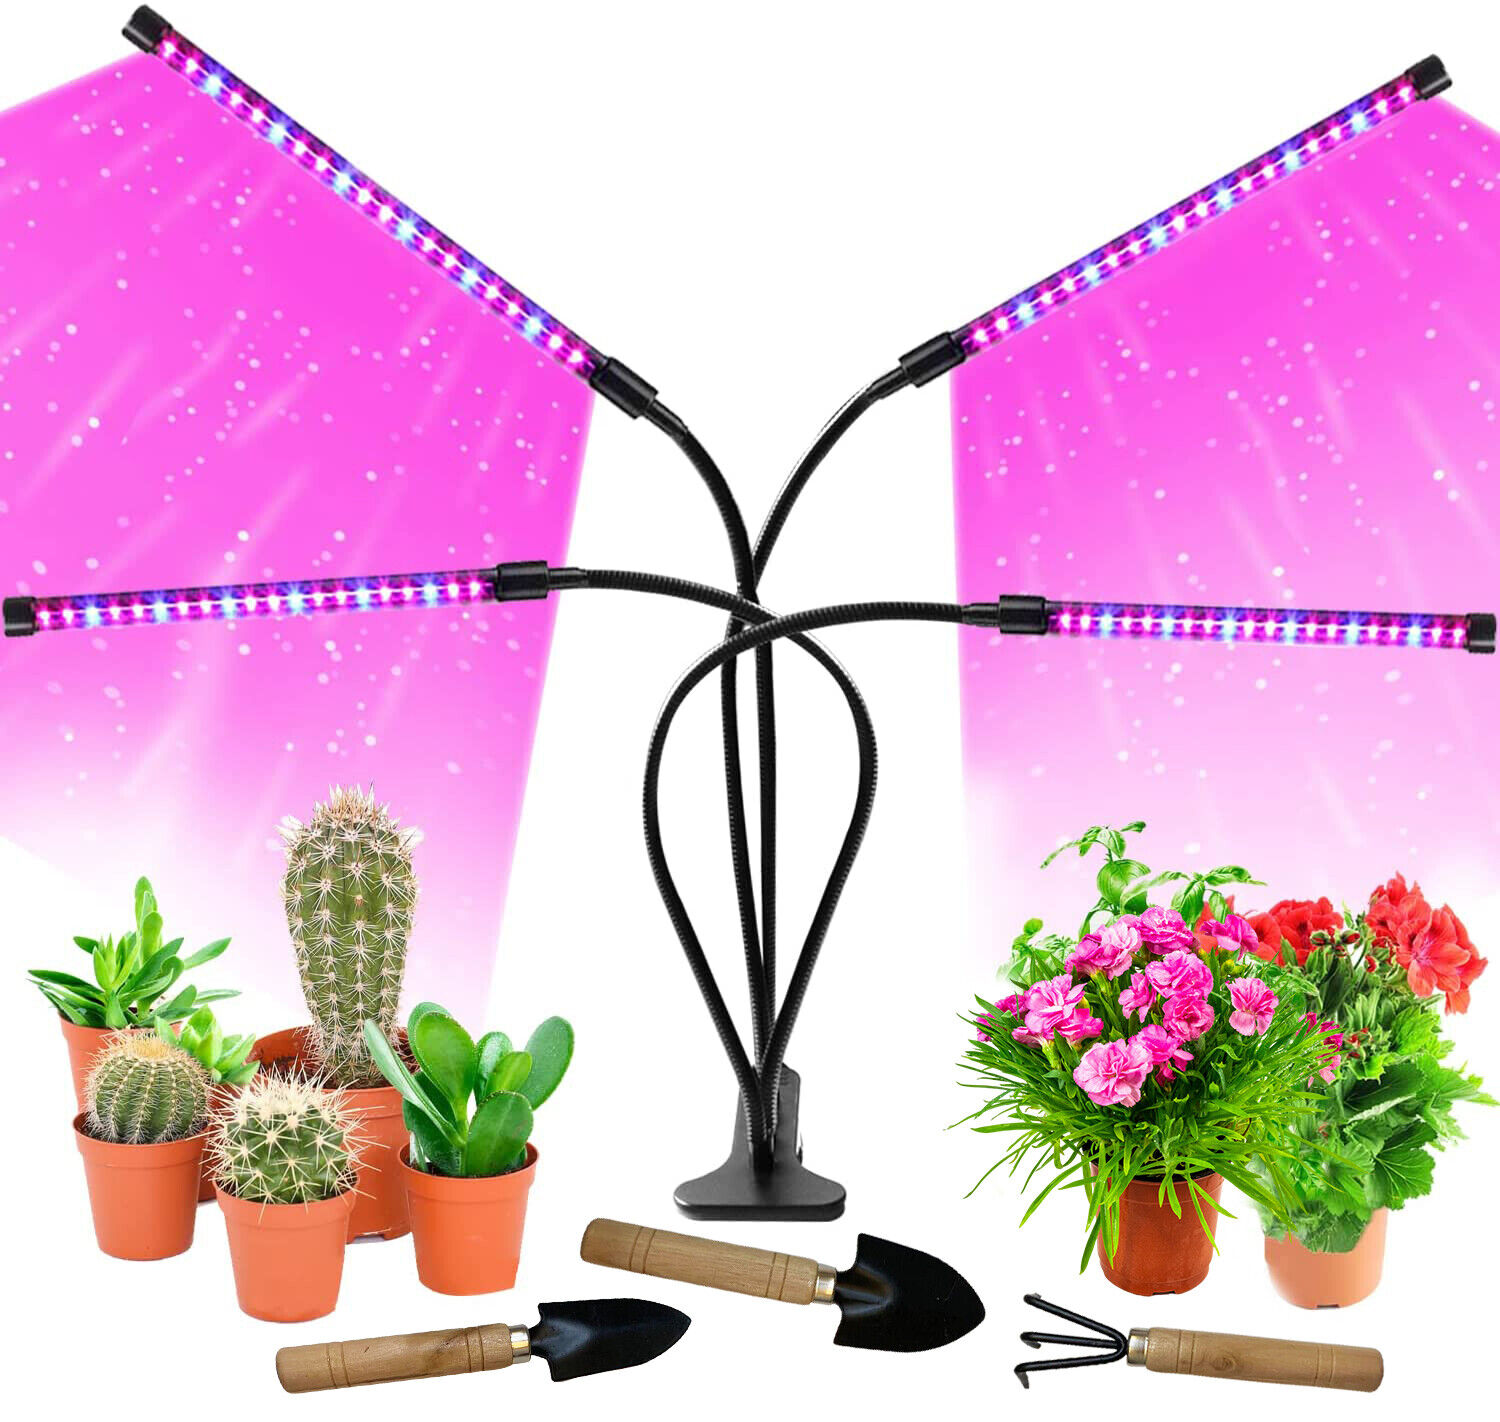 4 Heads LED Grow Light Plant Growing Lamp for Indoor Plants UV&Full Spectrum